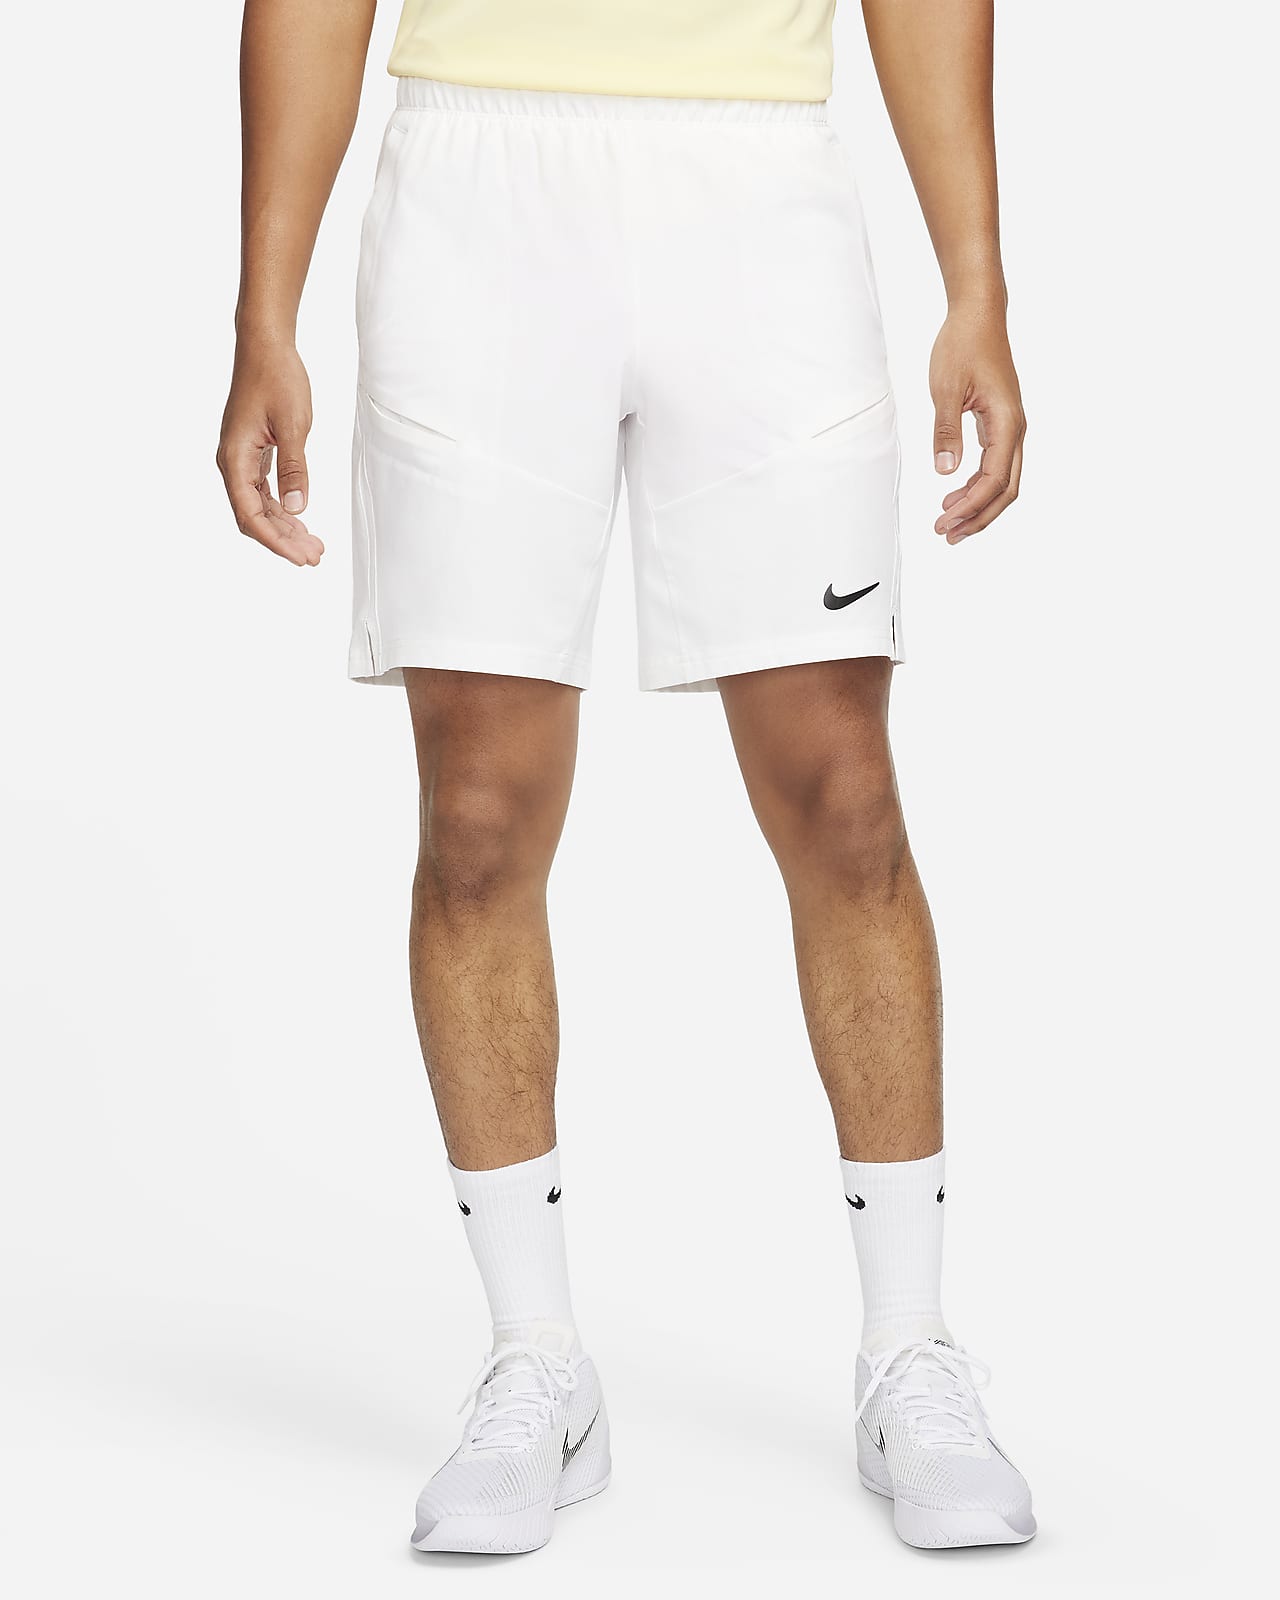 NikeCourt Advantage tennisshorts til herre (23 cm)